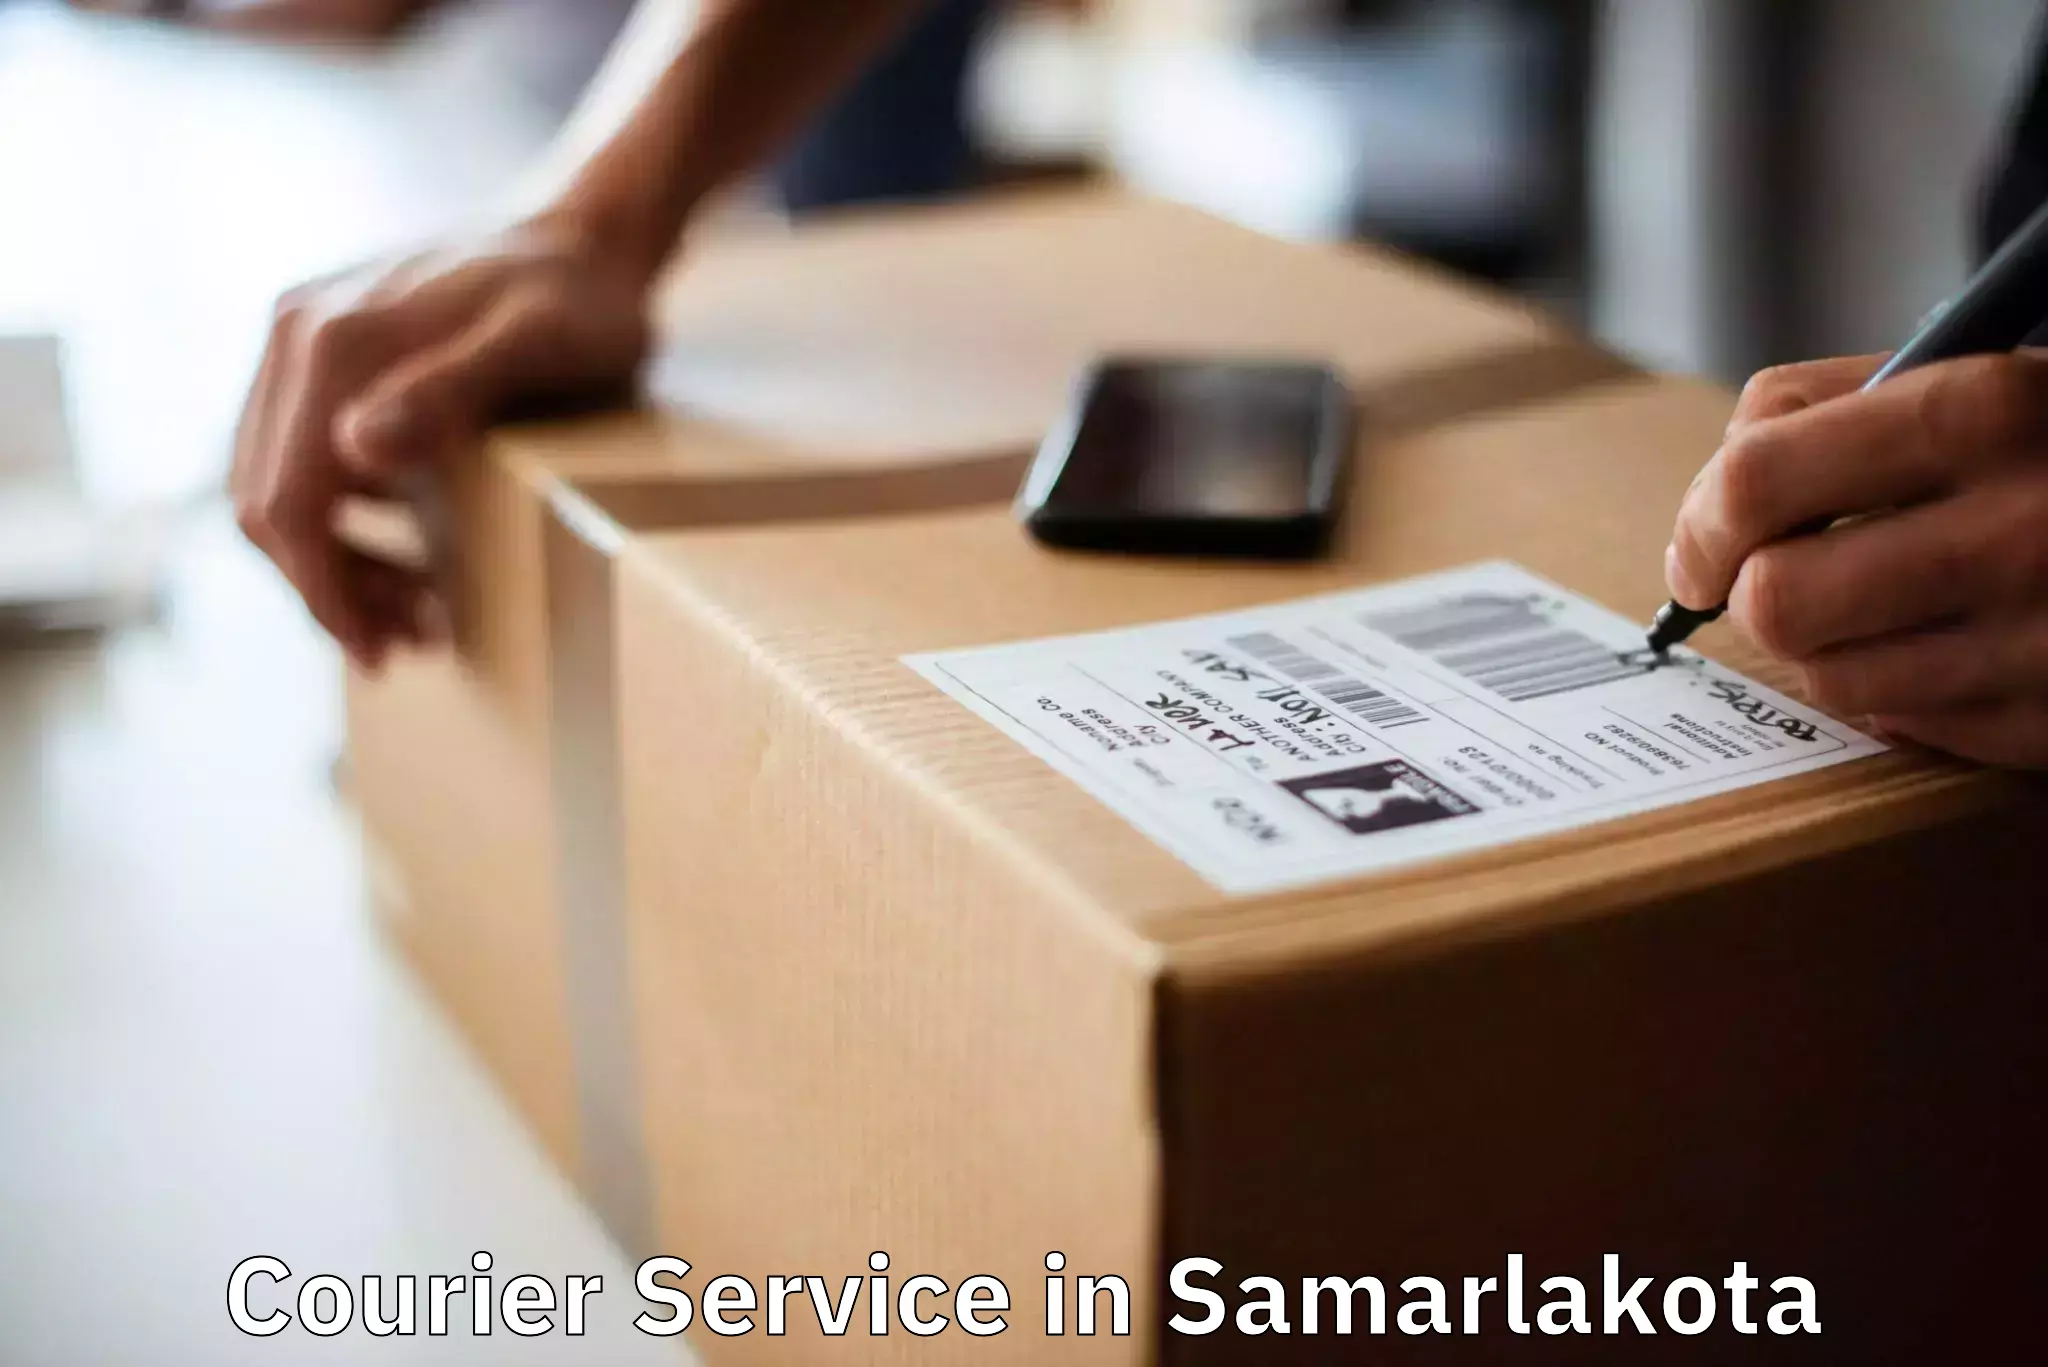 Overnight delivery in Samarlakota